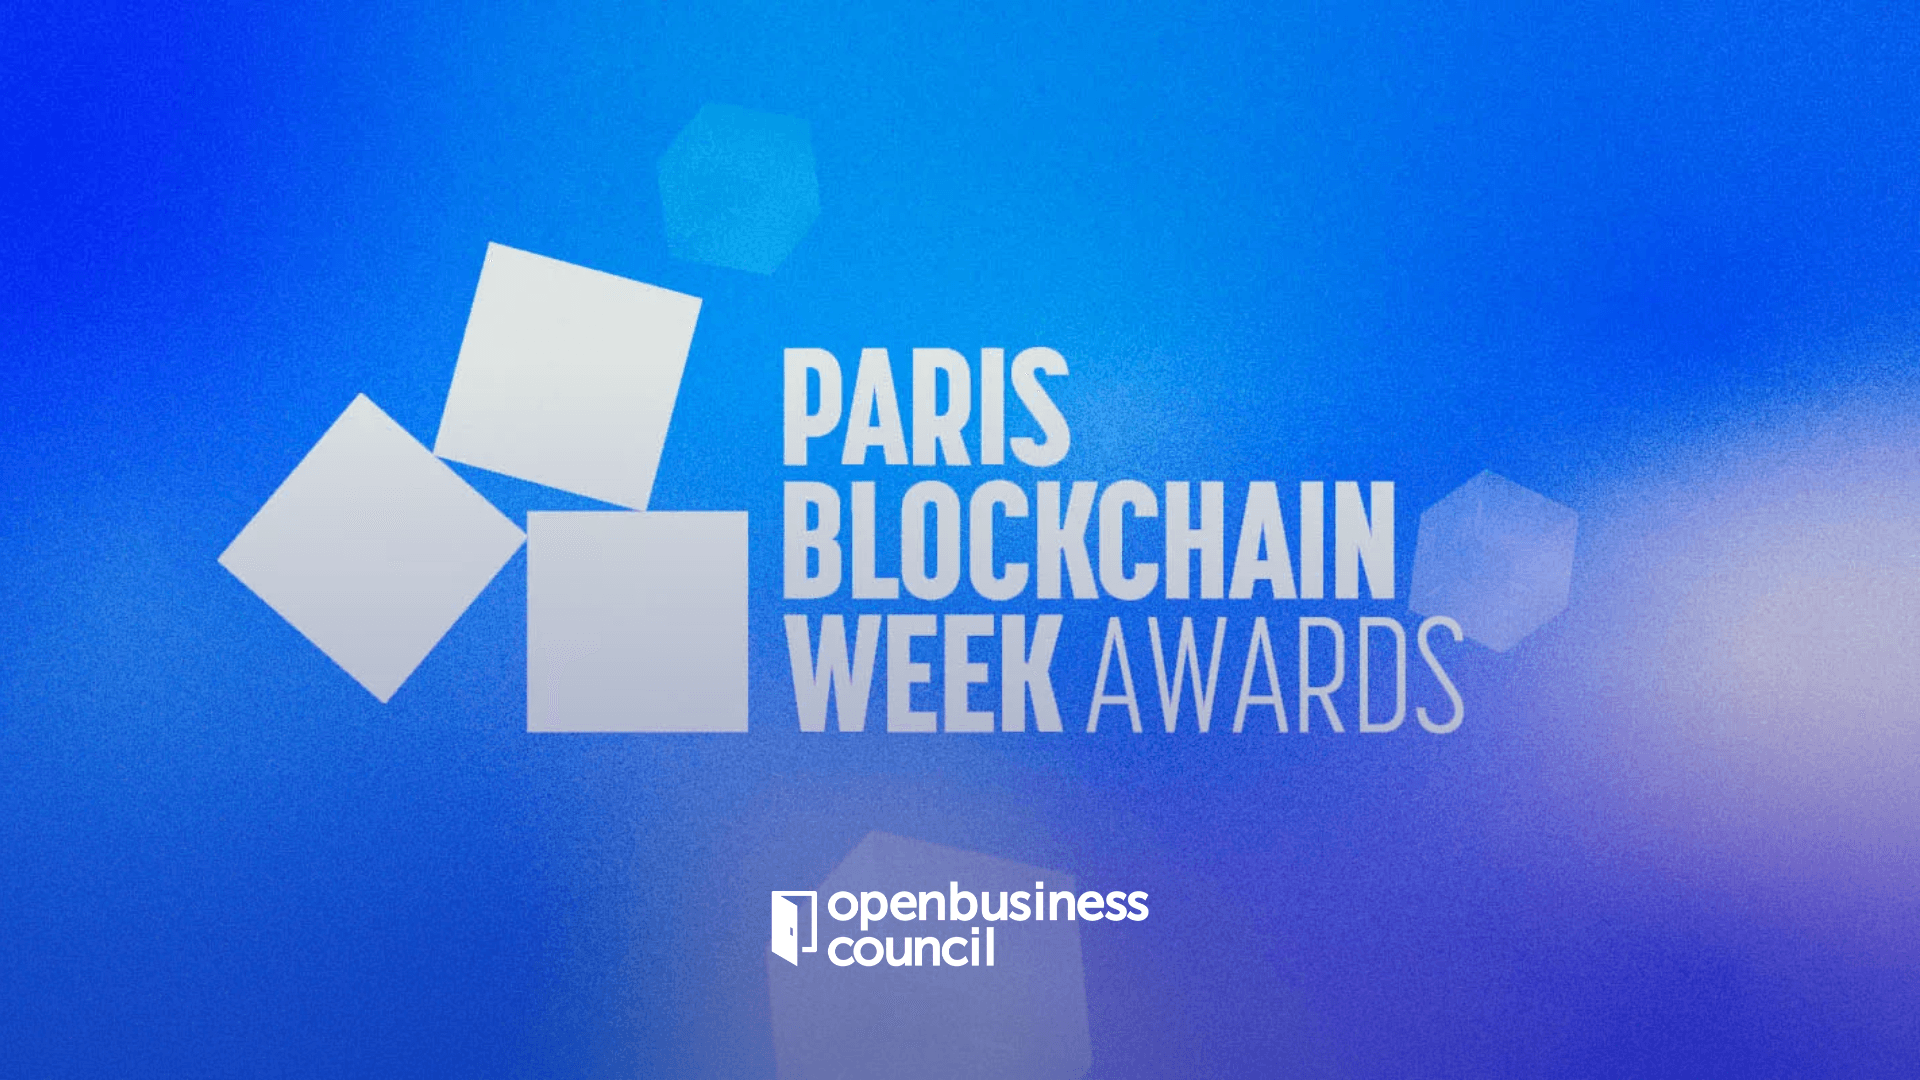 Paris Blockchain Week Awards Nominees Announced